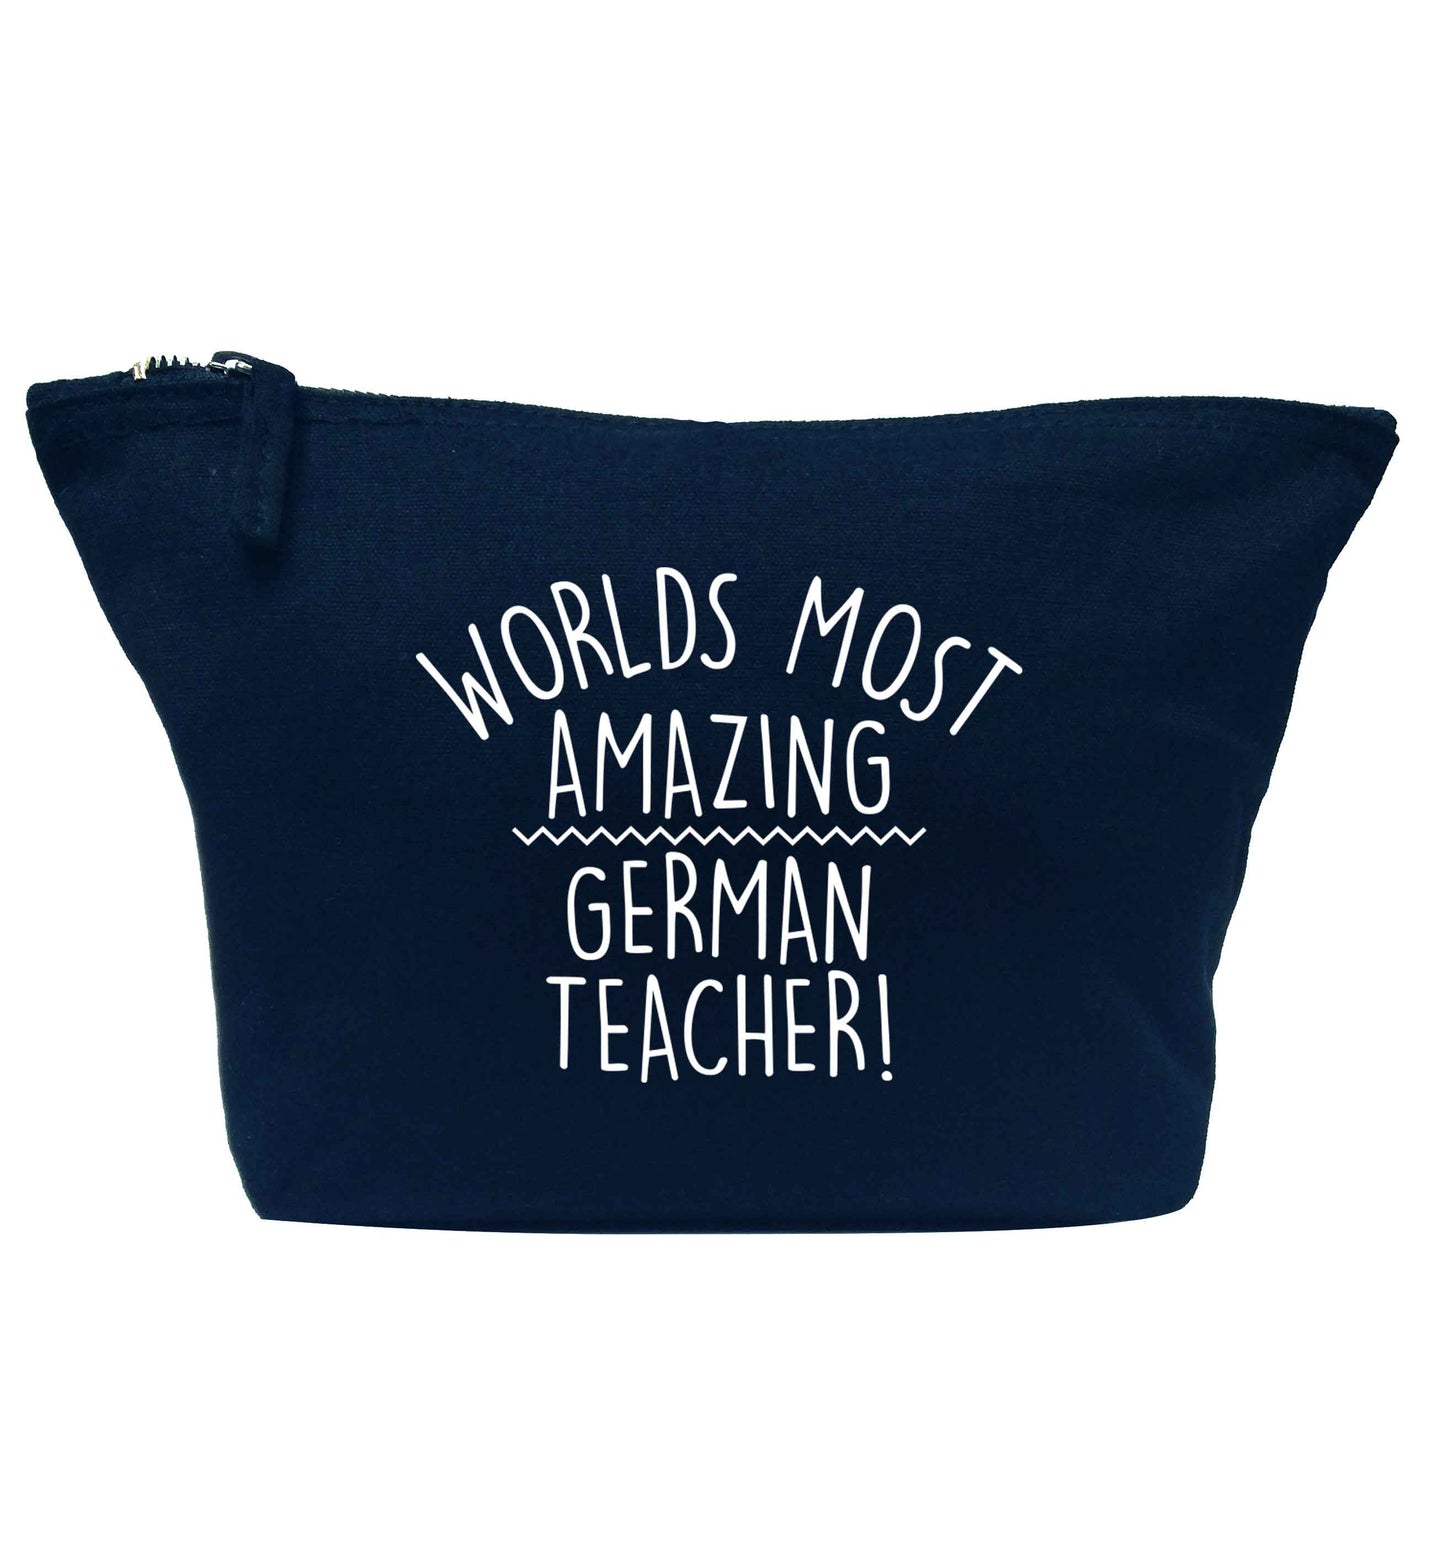 Worlds most amazing German teacher navy makeup bag